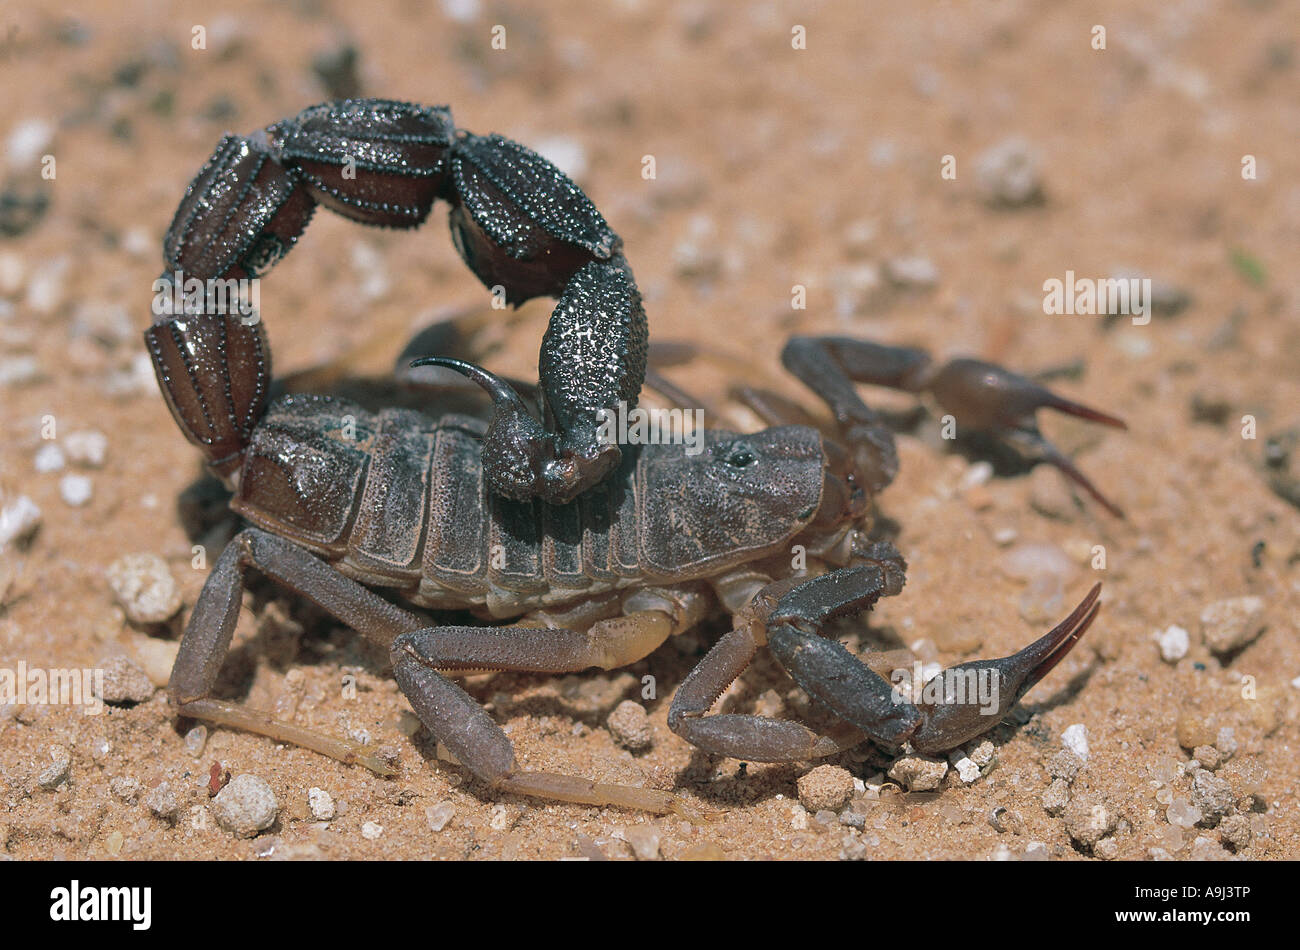 Scorpion Kalahari Gemsbok National Park South Africa Stock Photo